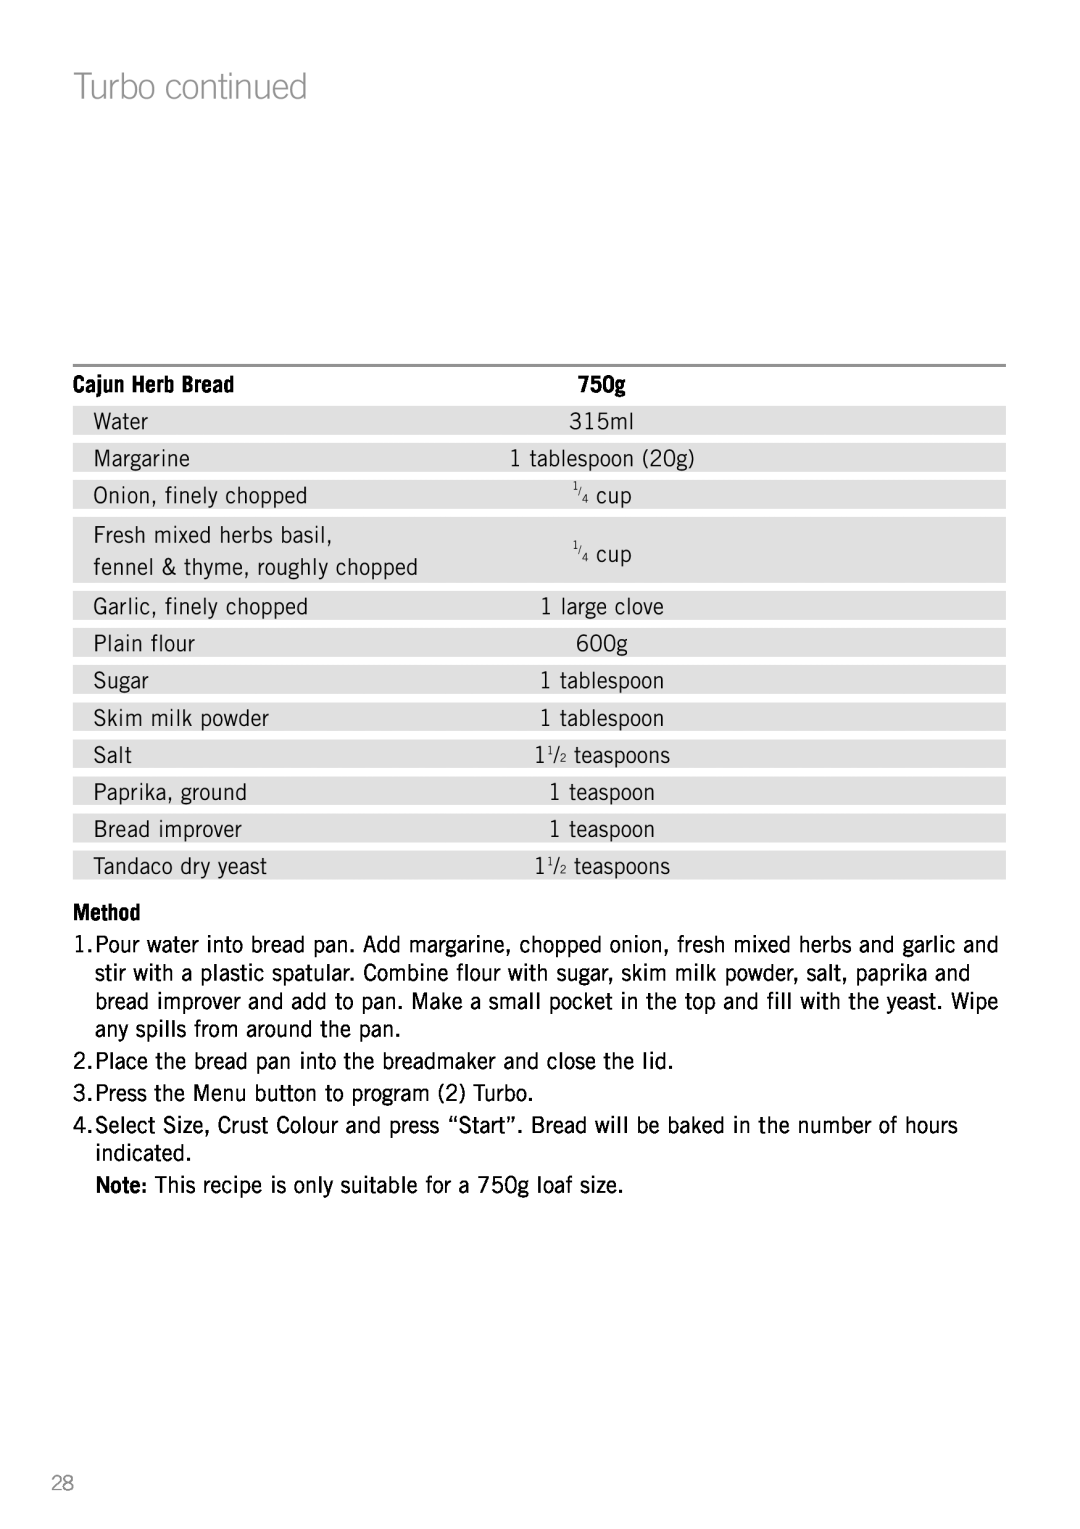 Sunbeam BM3500 manual Cajun Herb Bread, Turbo continued, Method 